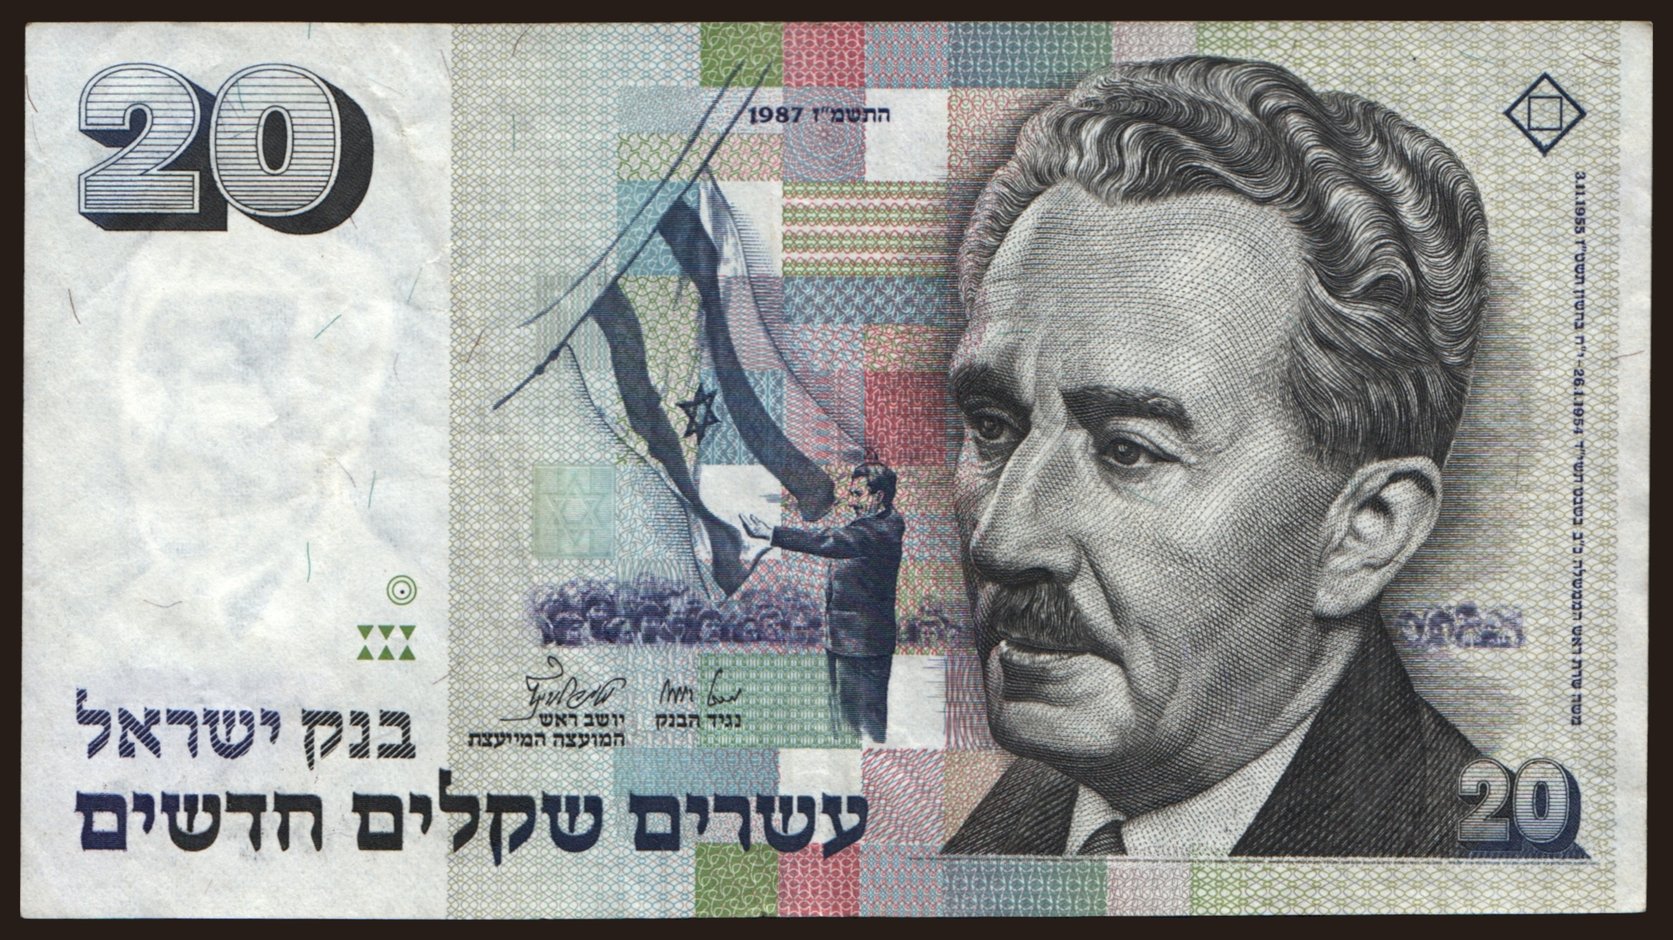 20 sheqalim, 1987